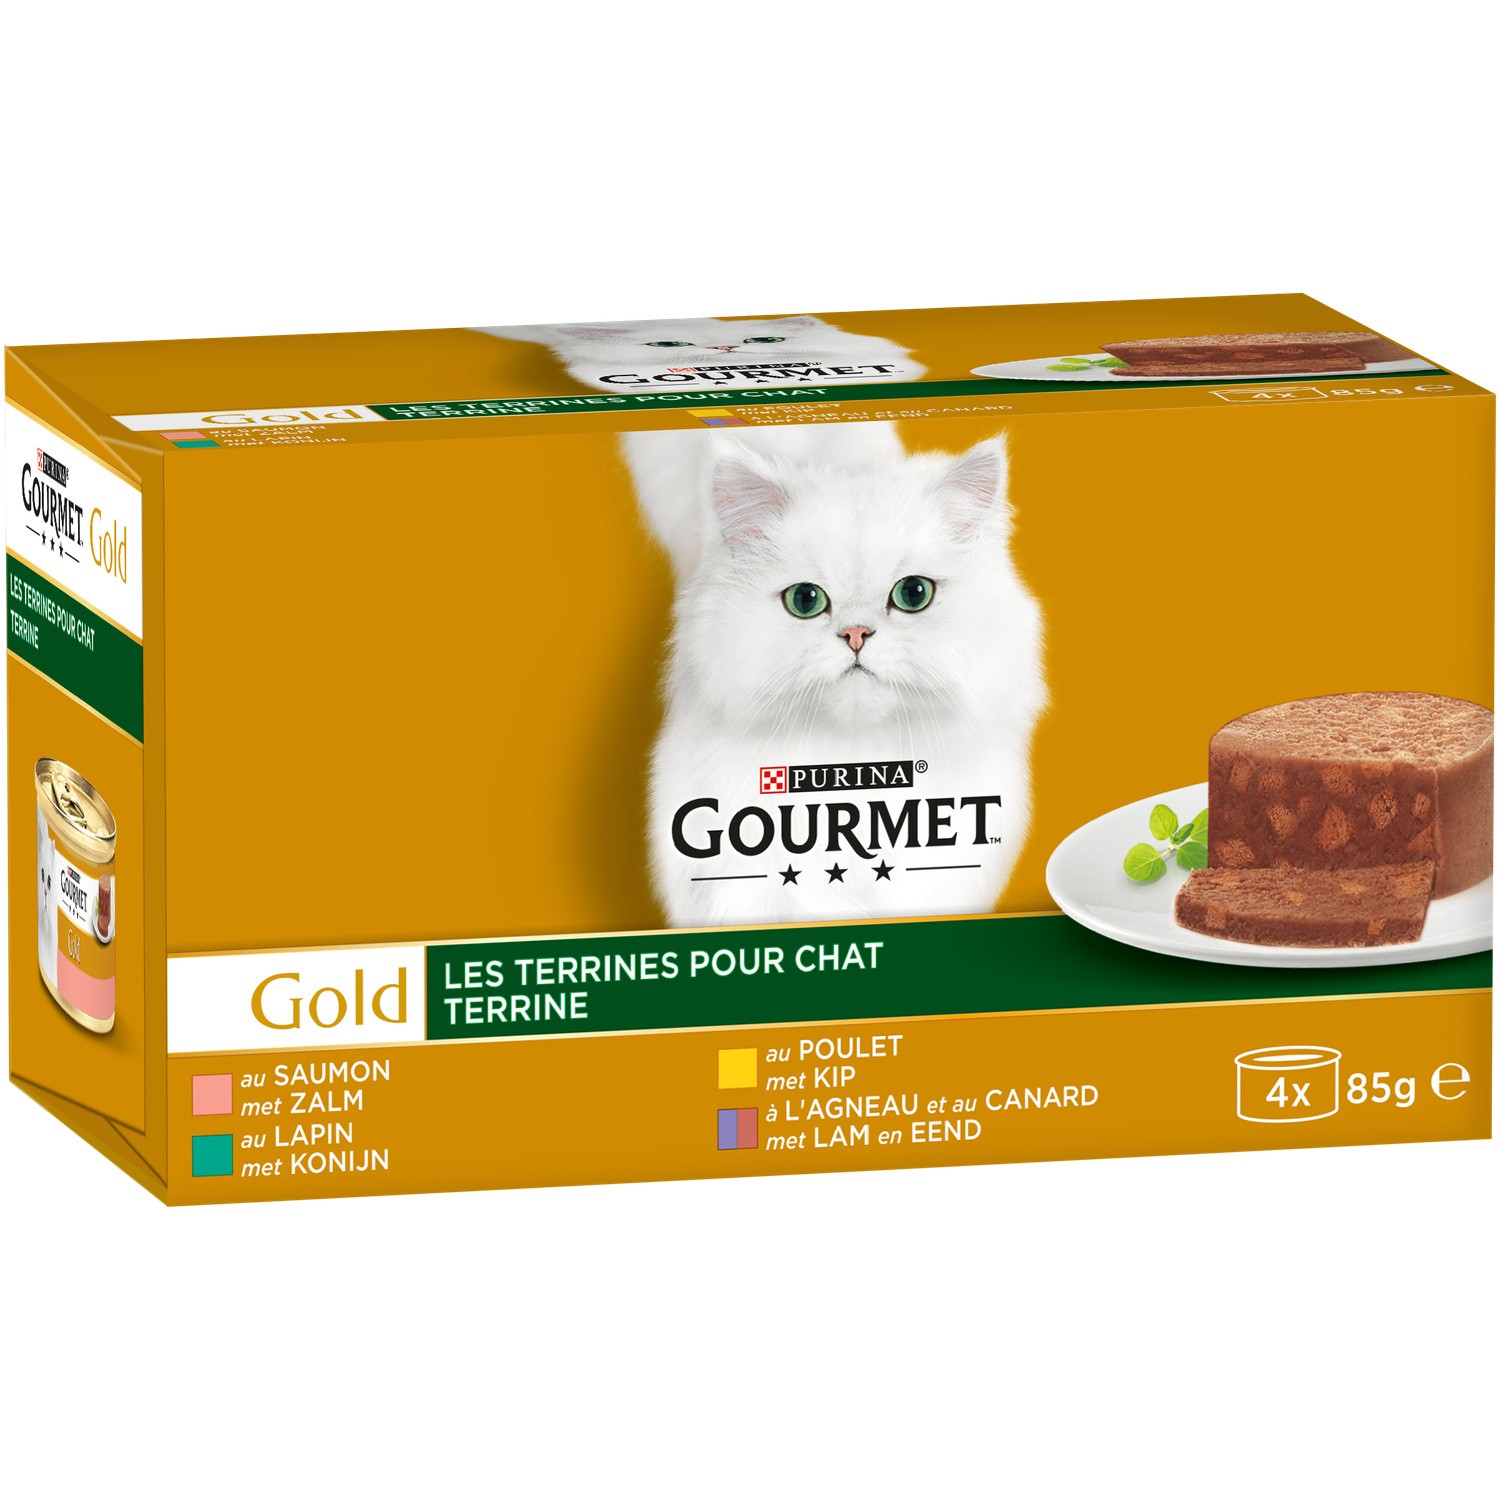 Gourmet gold terrine chat